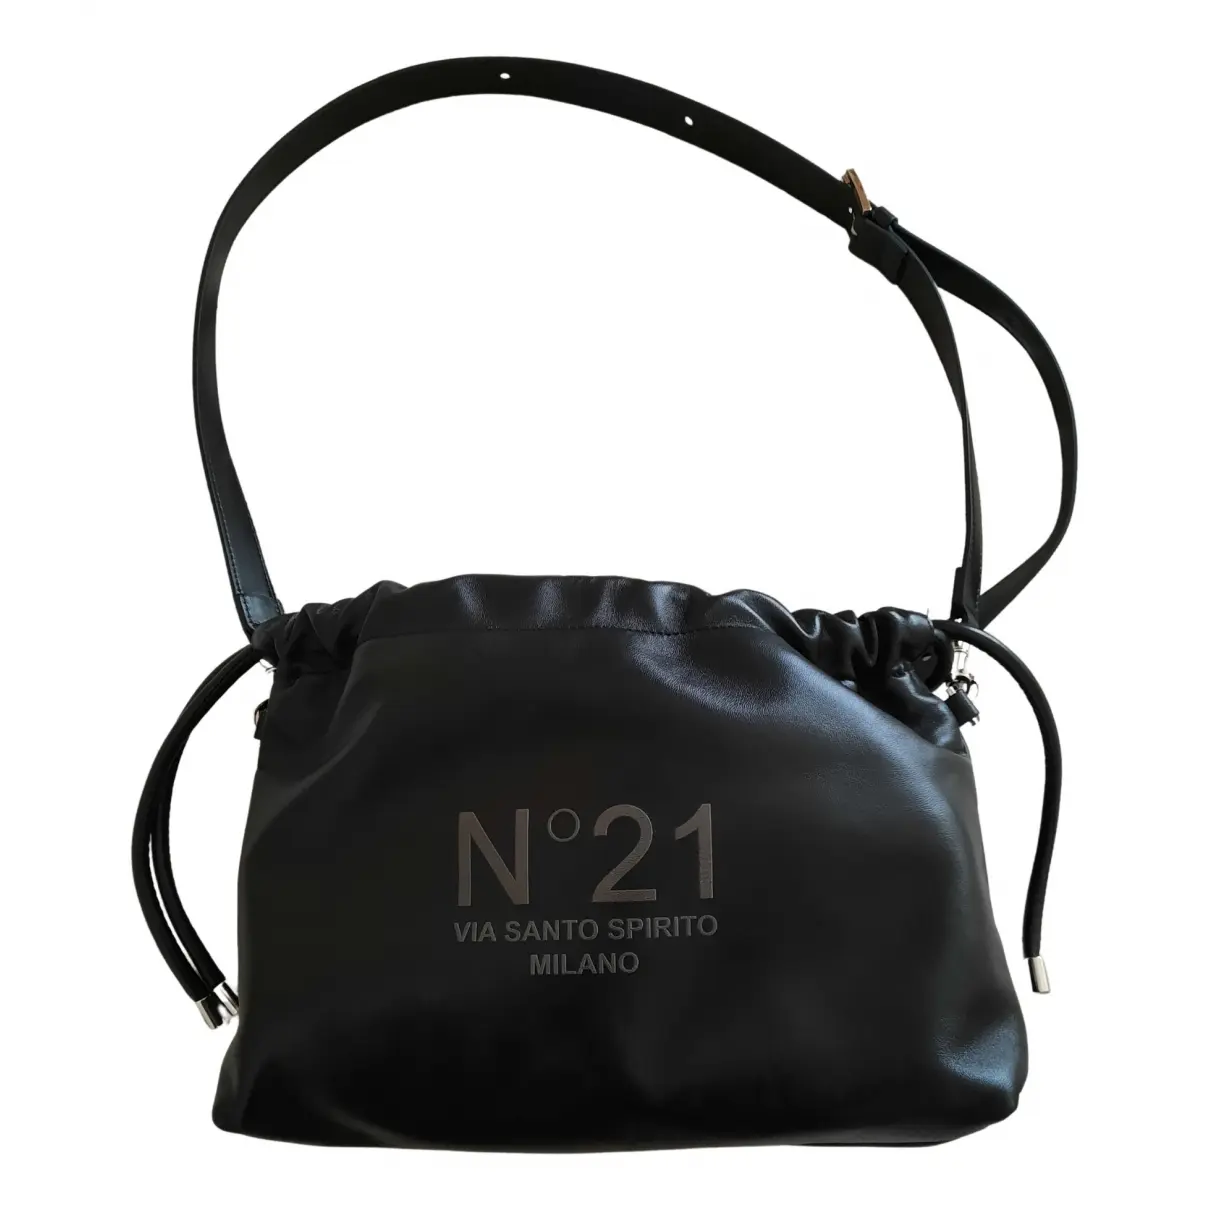 Leather handbag N°21